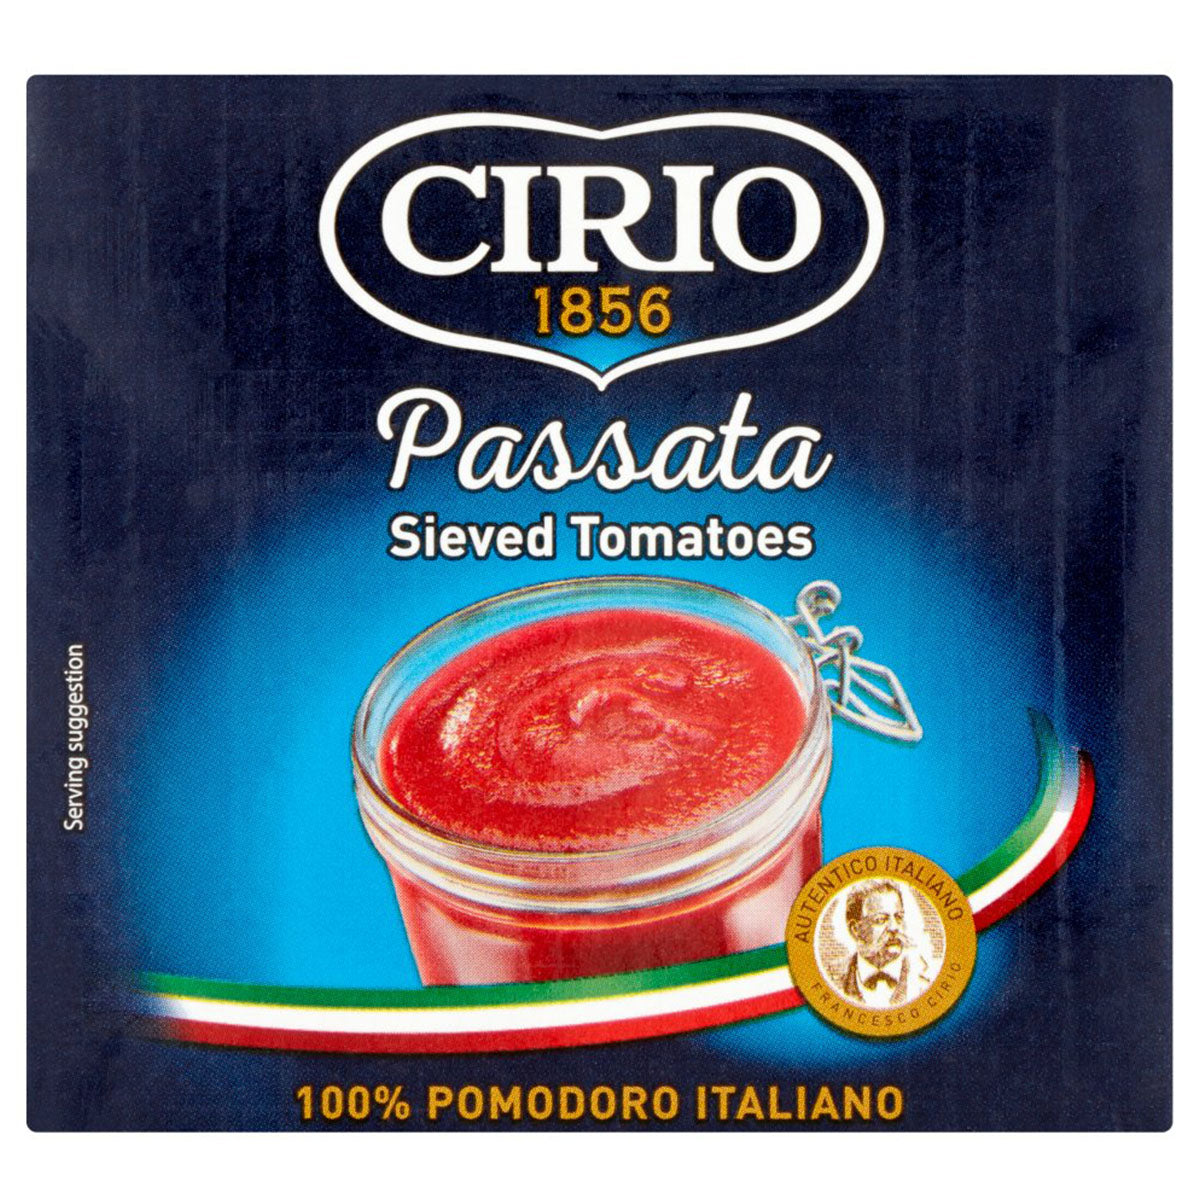 Cirio - Passata Sieved Tomatoes - 500g - Continental Food Store